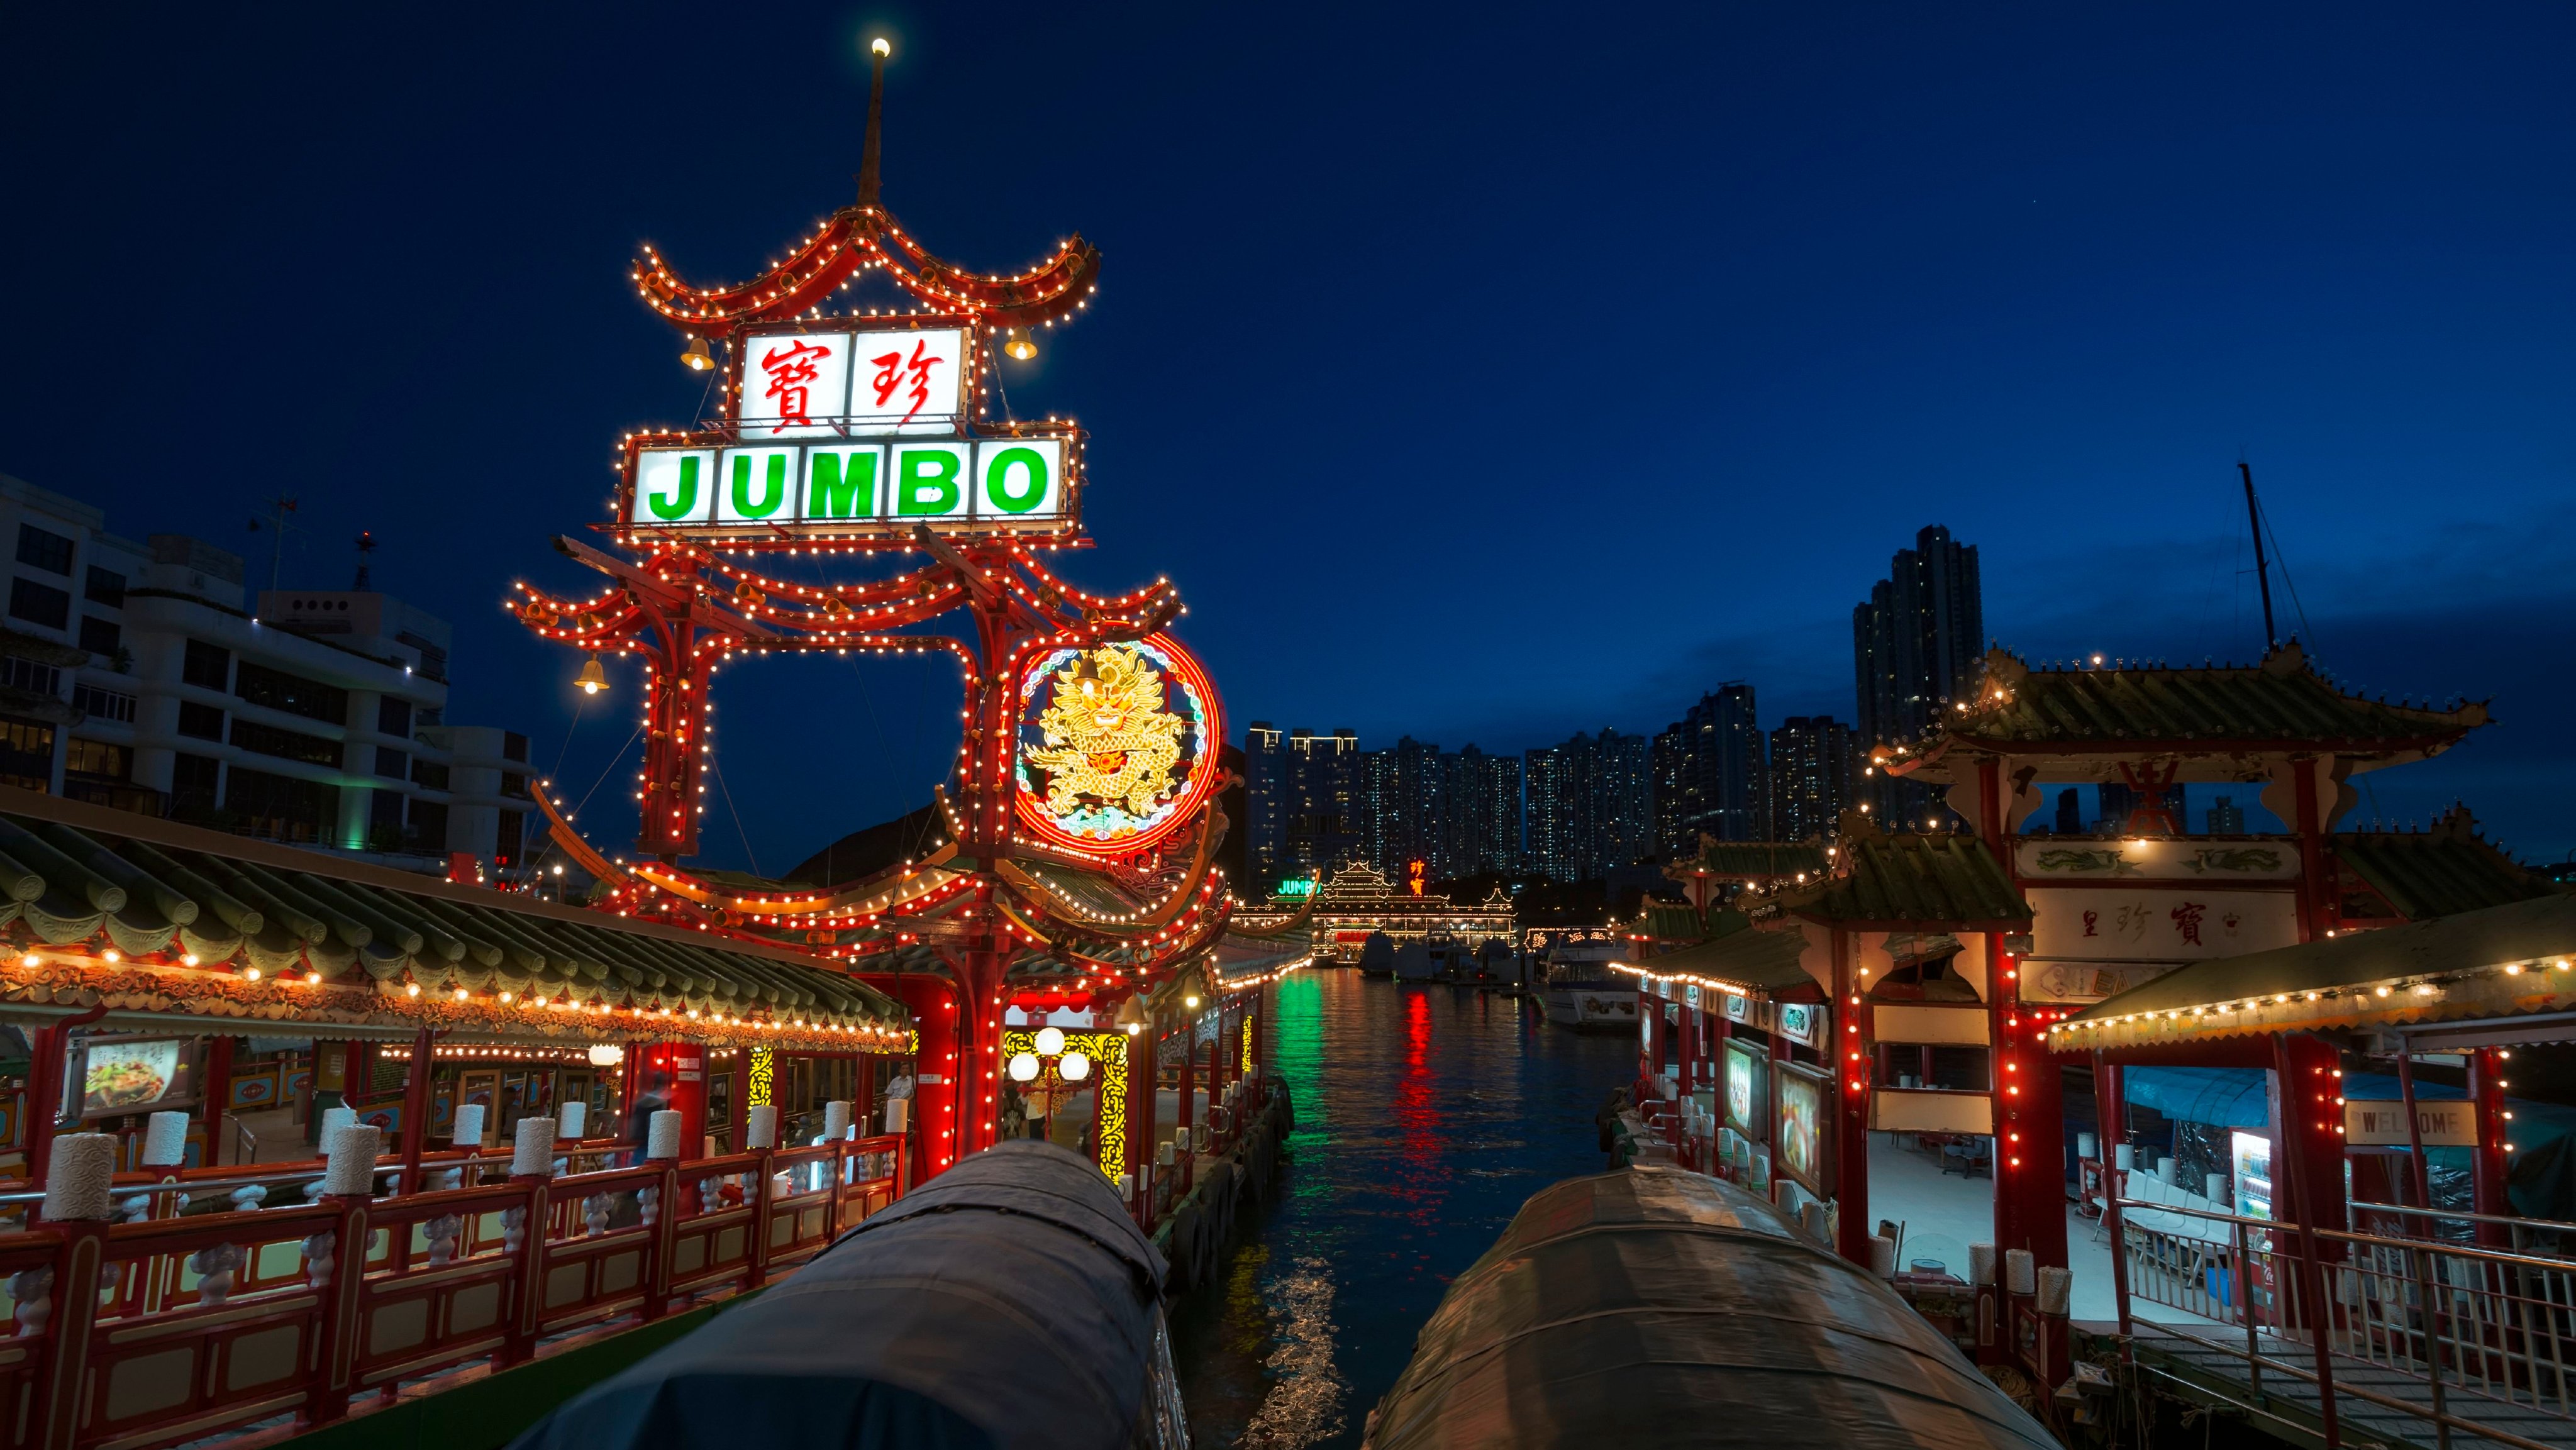 The Jumbo floating restaurant, and Aberdeen yacht club, Aberdeen, Hong Kong, China.